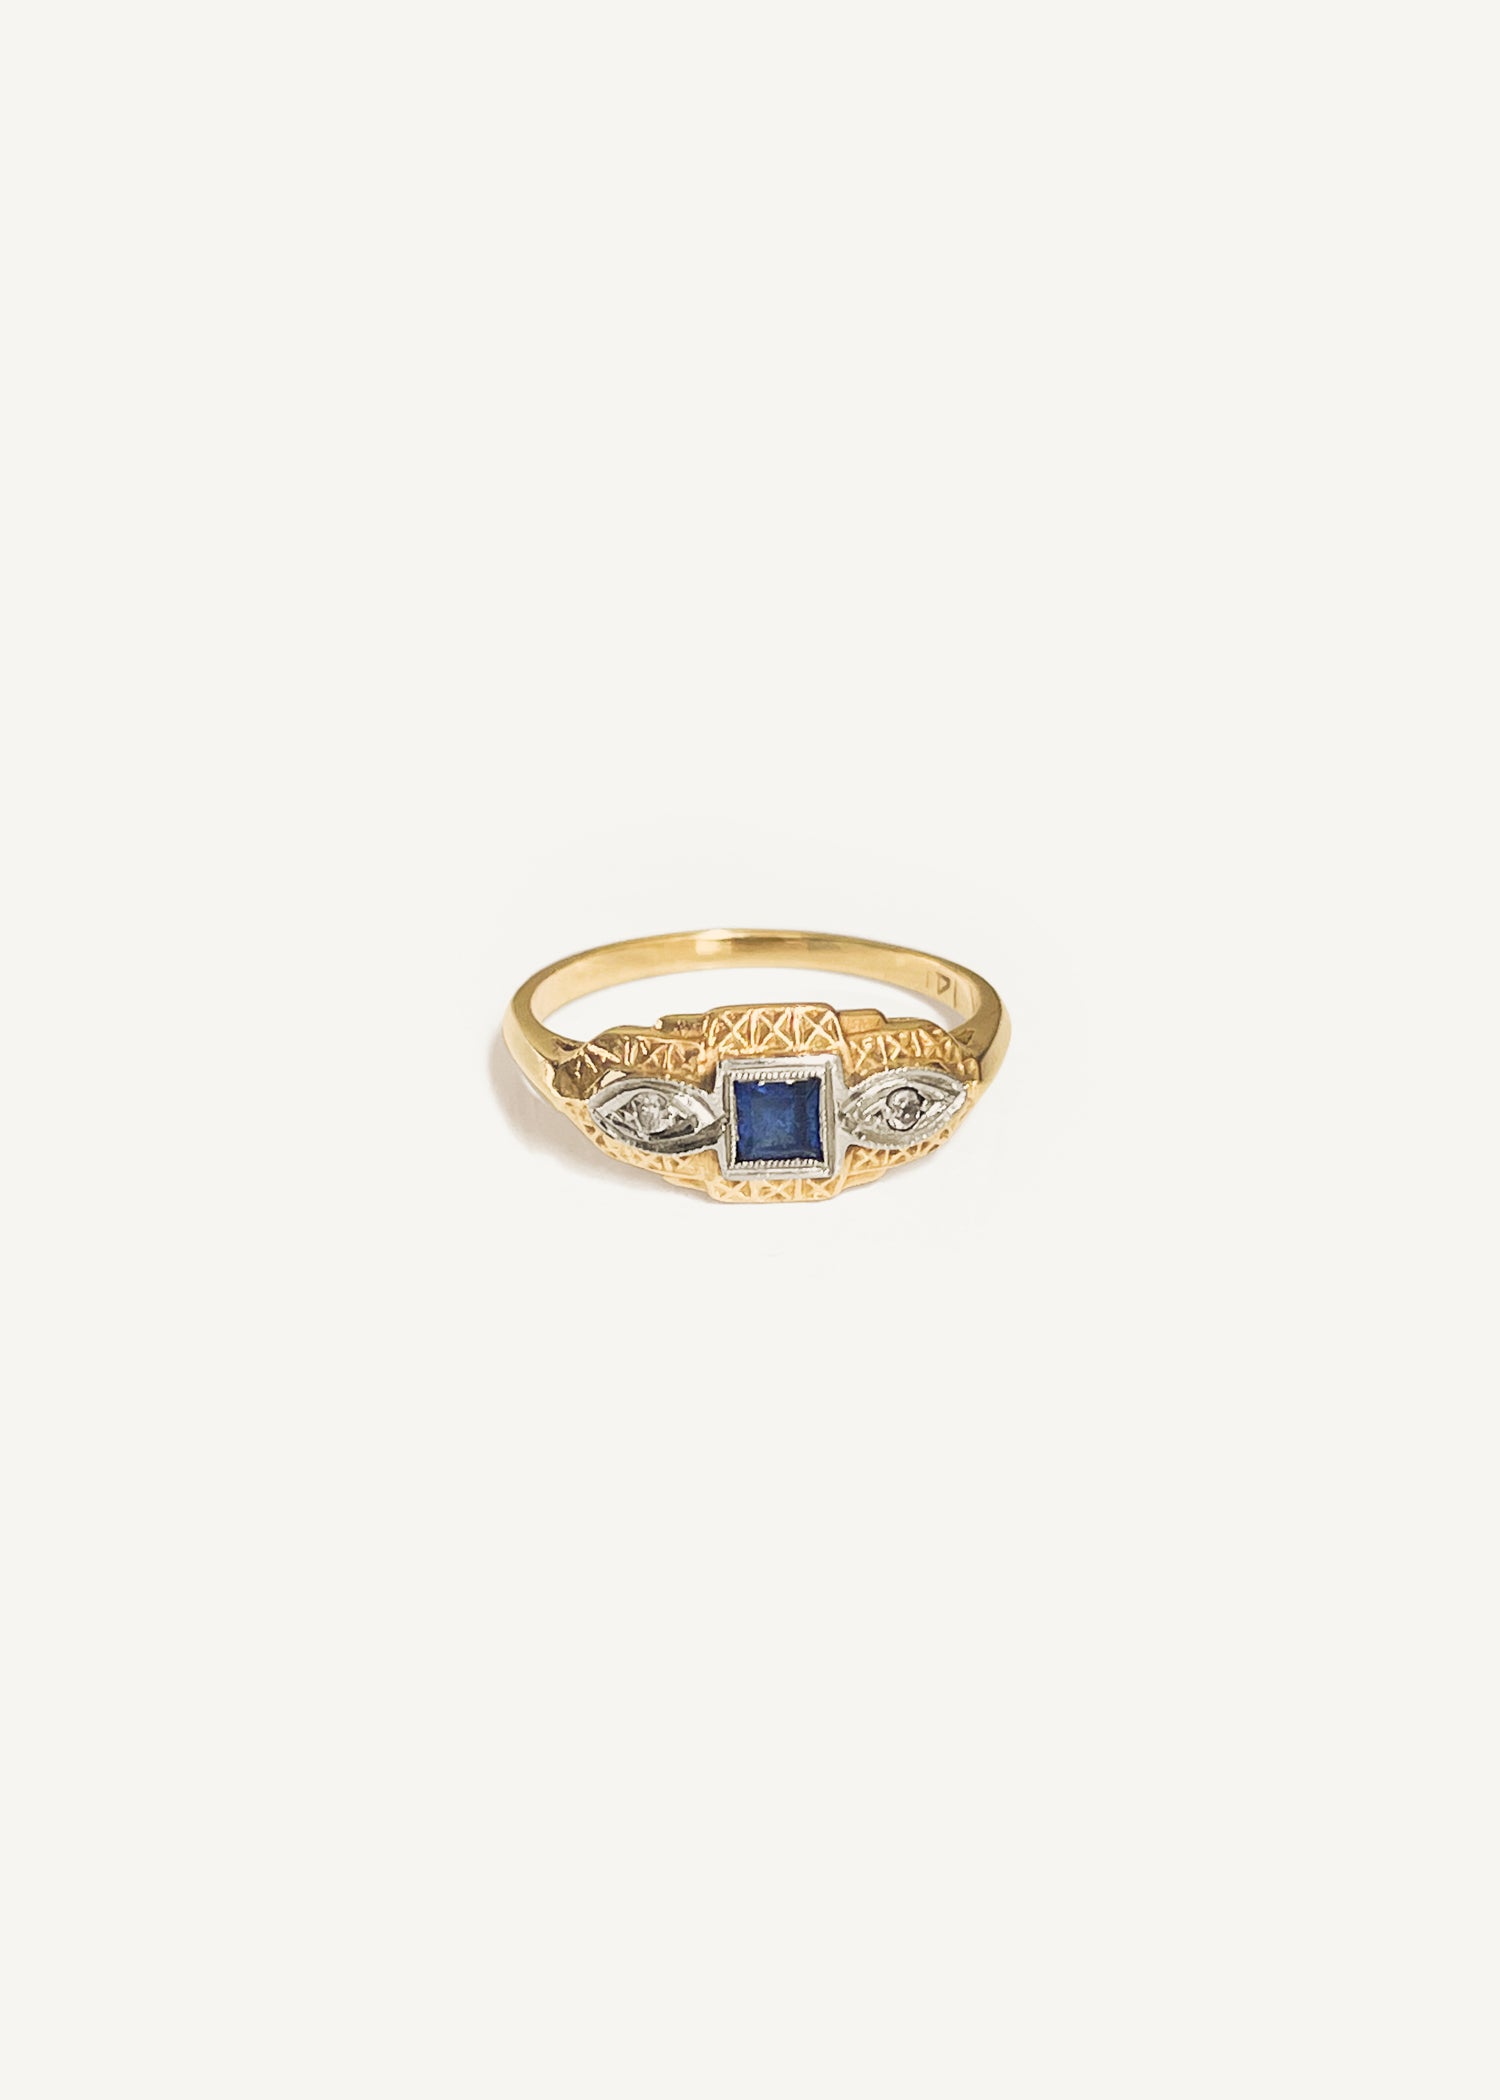 Vintage Two-Tone Art Deco Sapphire Ring